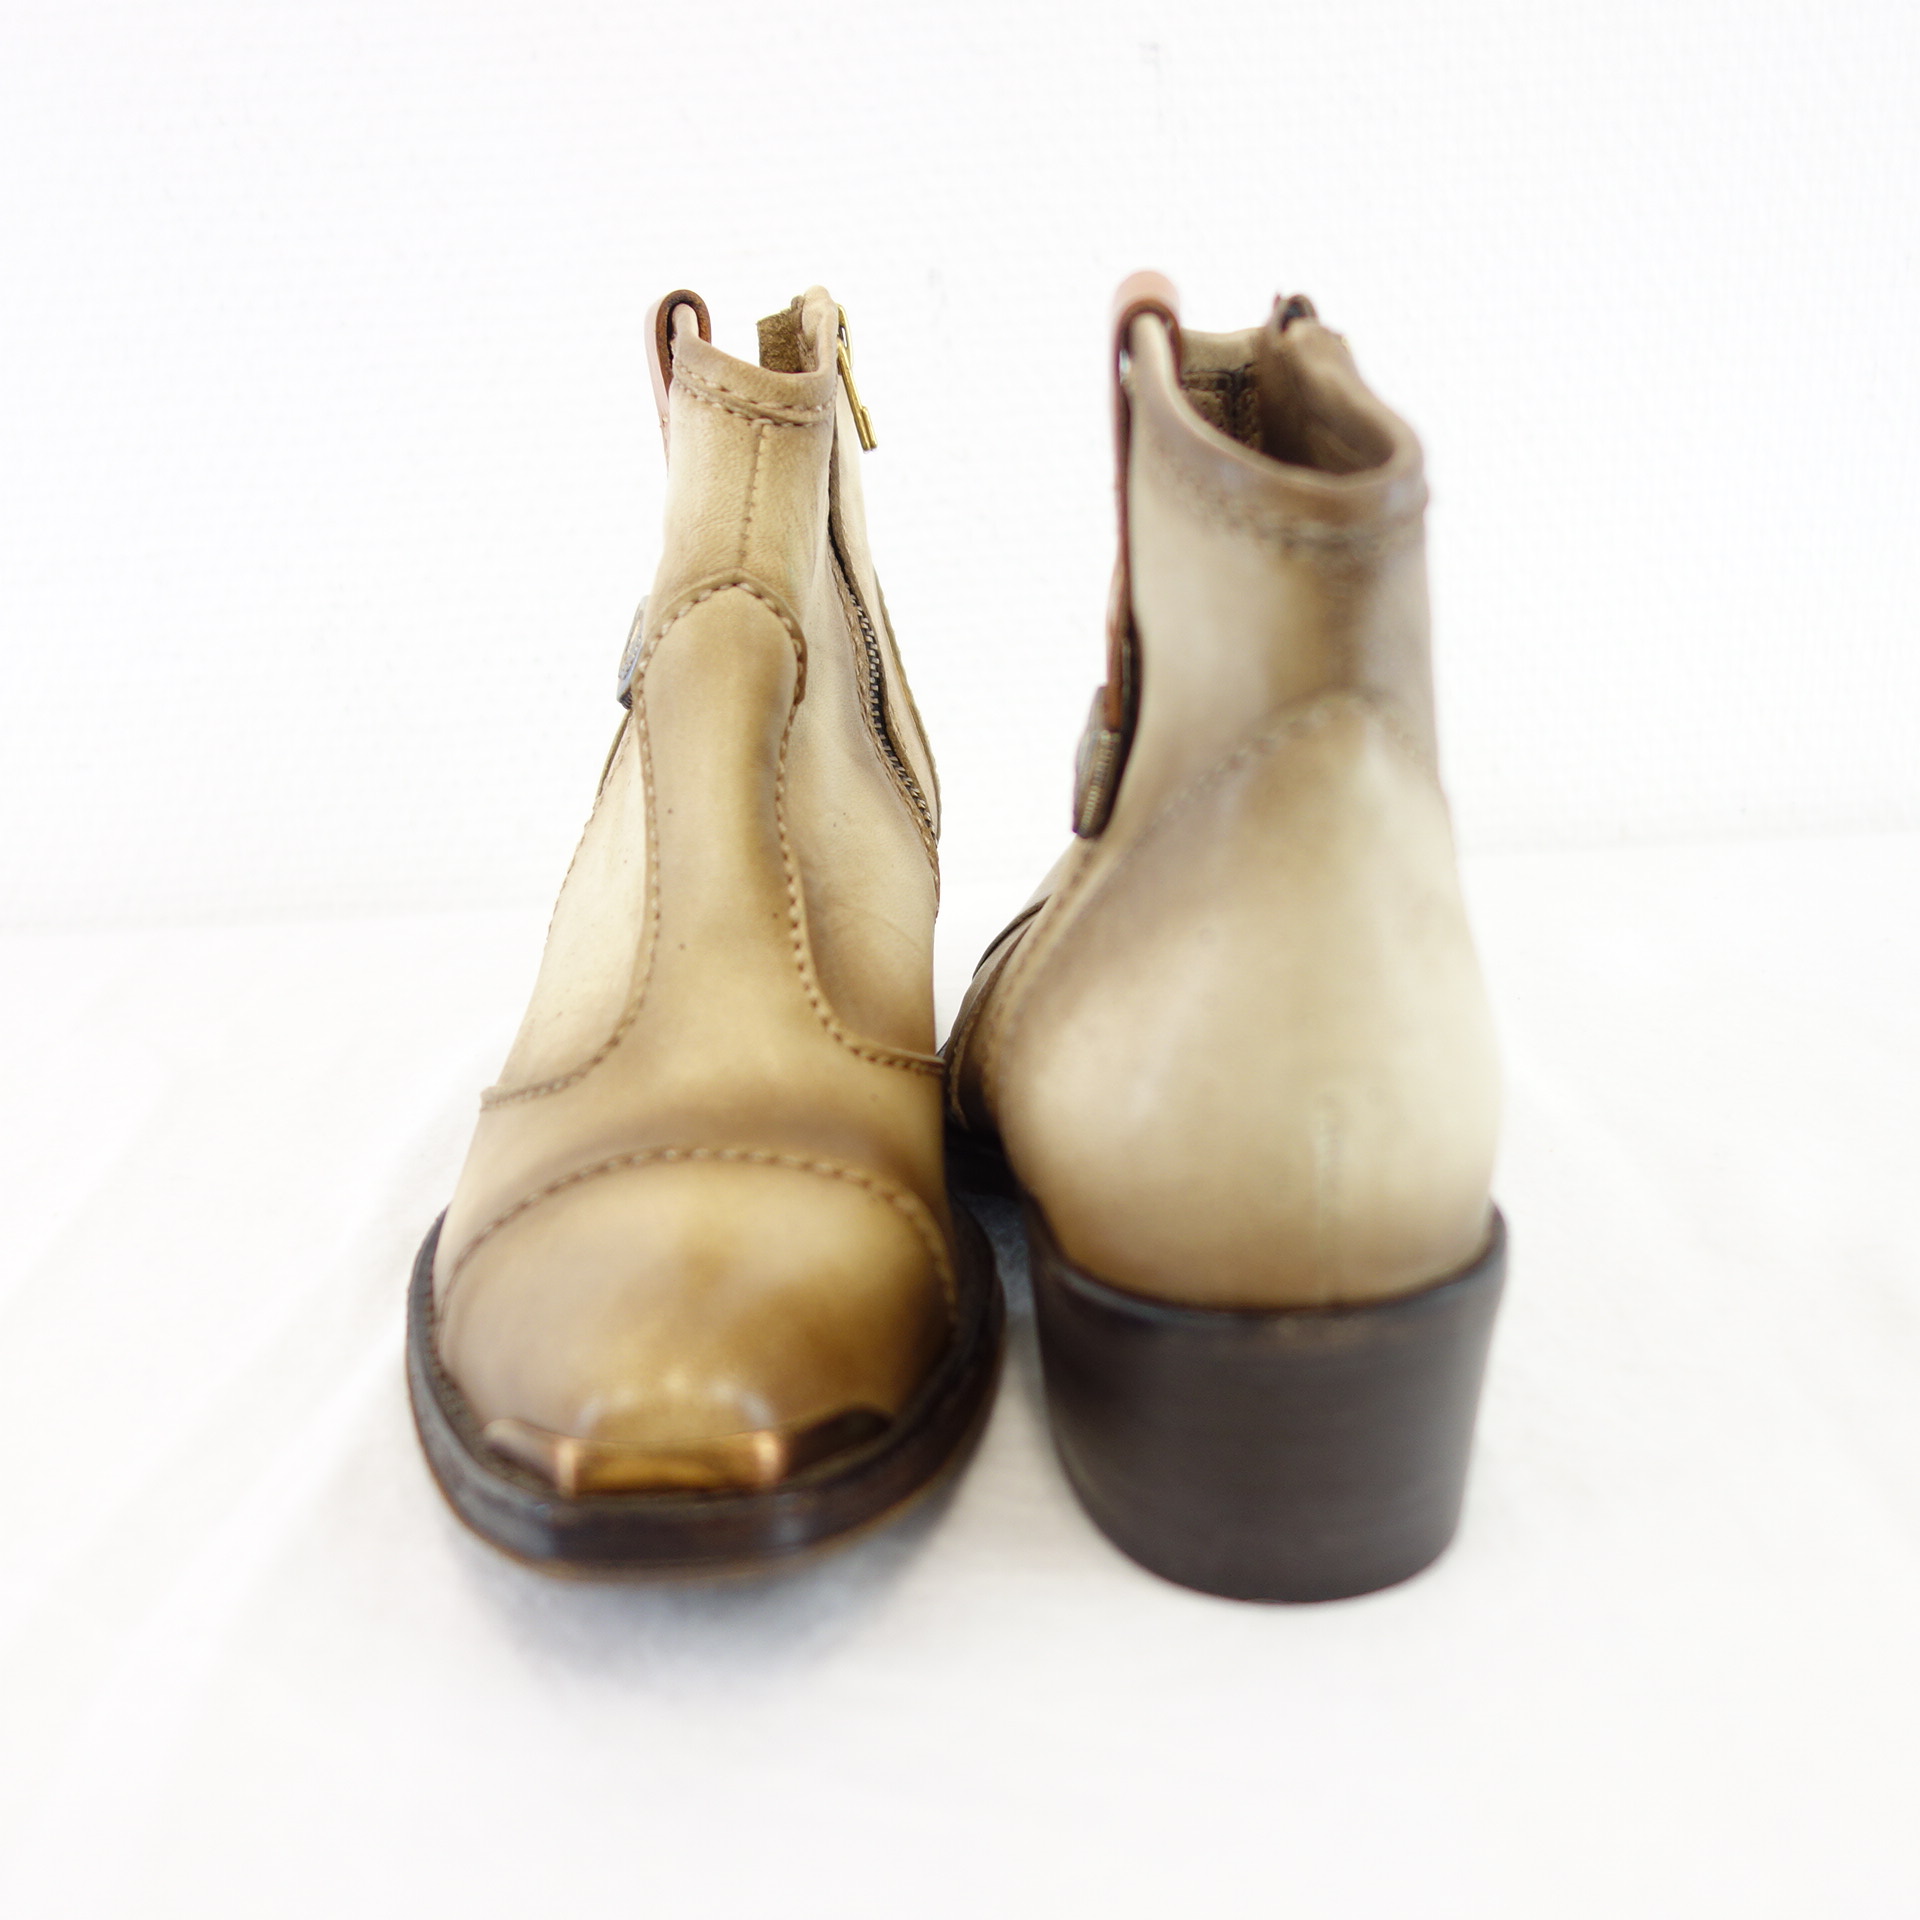 AREA FORTE Damen Schuhe Boots Bootie Stiefelette Stiefel Leder Beige Gr 37 ( 36,5 )